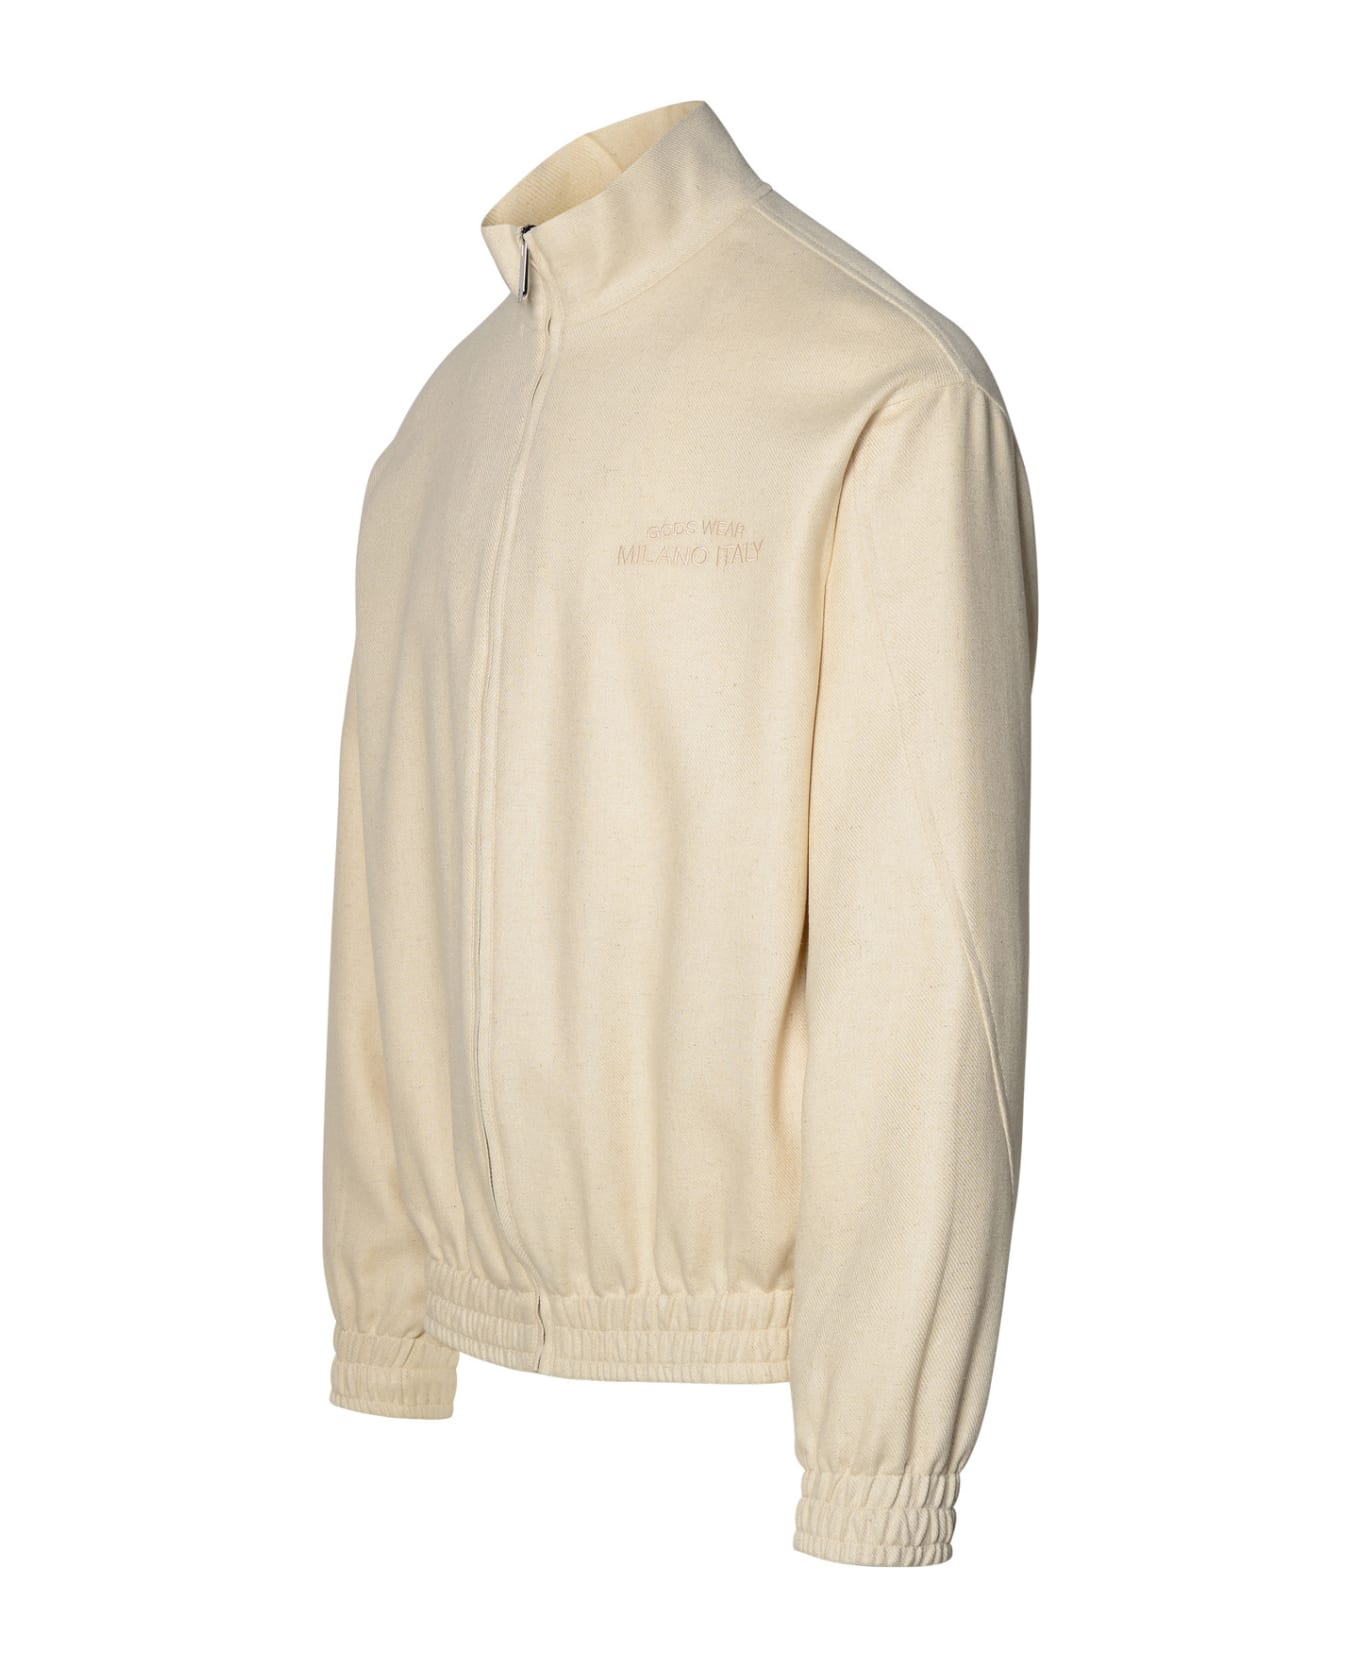 GCDS Ivory Linen Blend Jacket - Off White